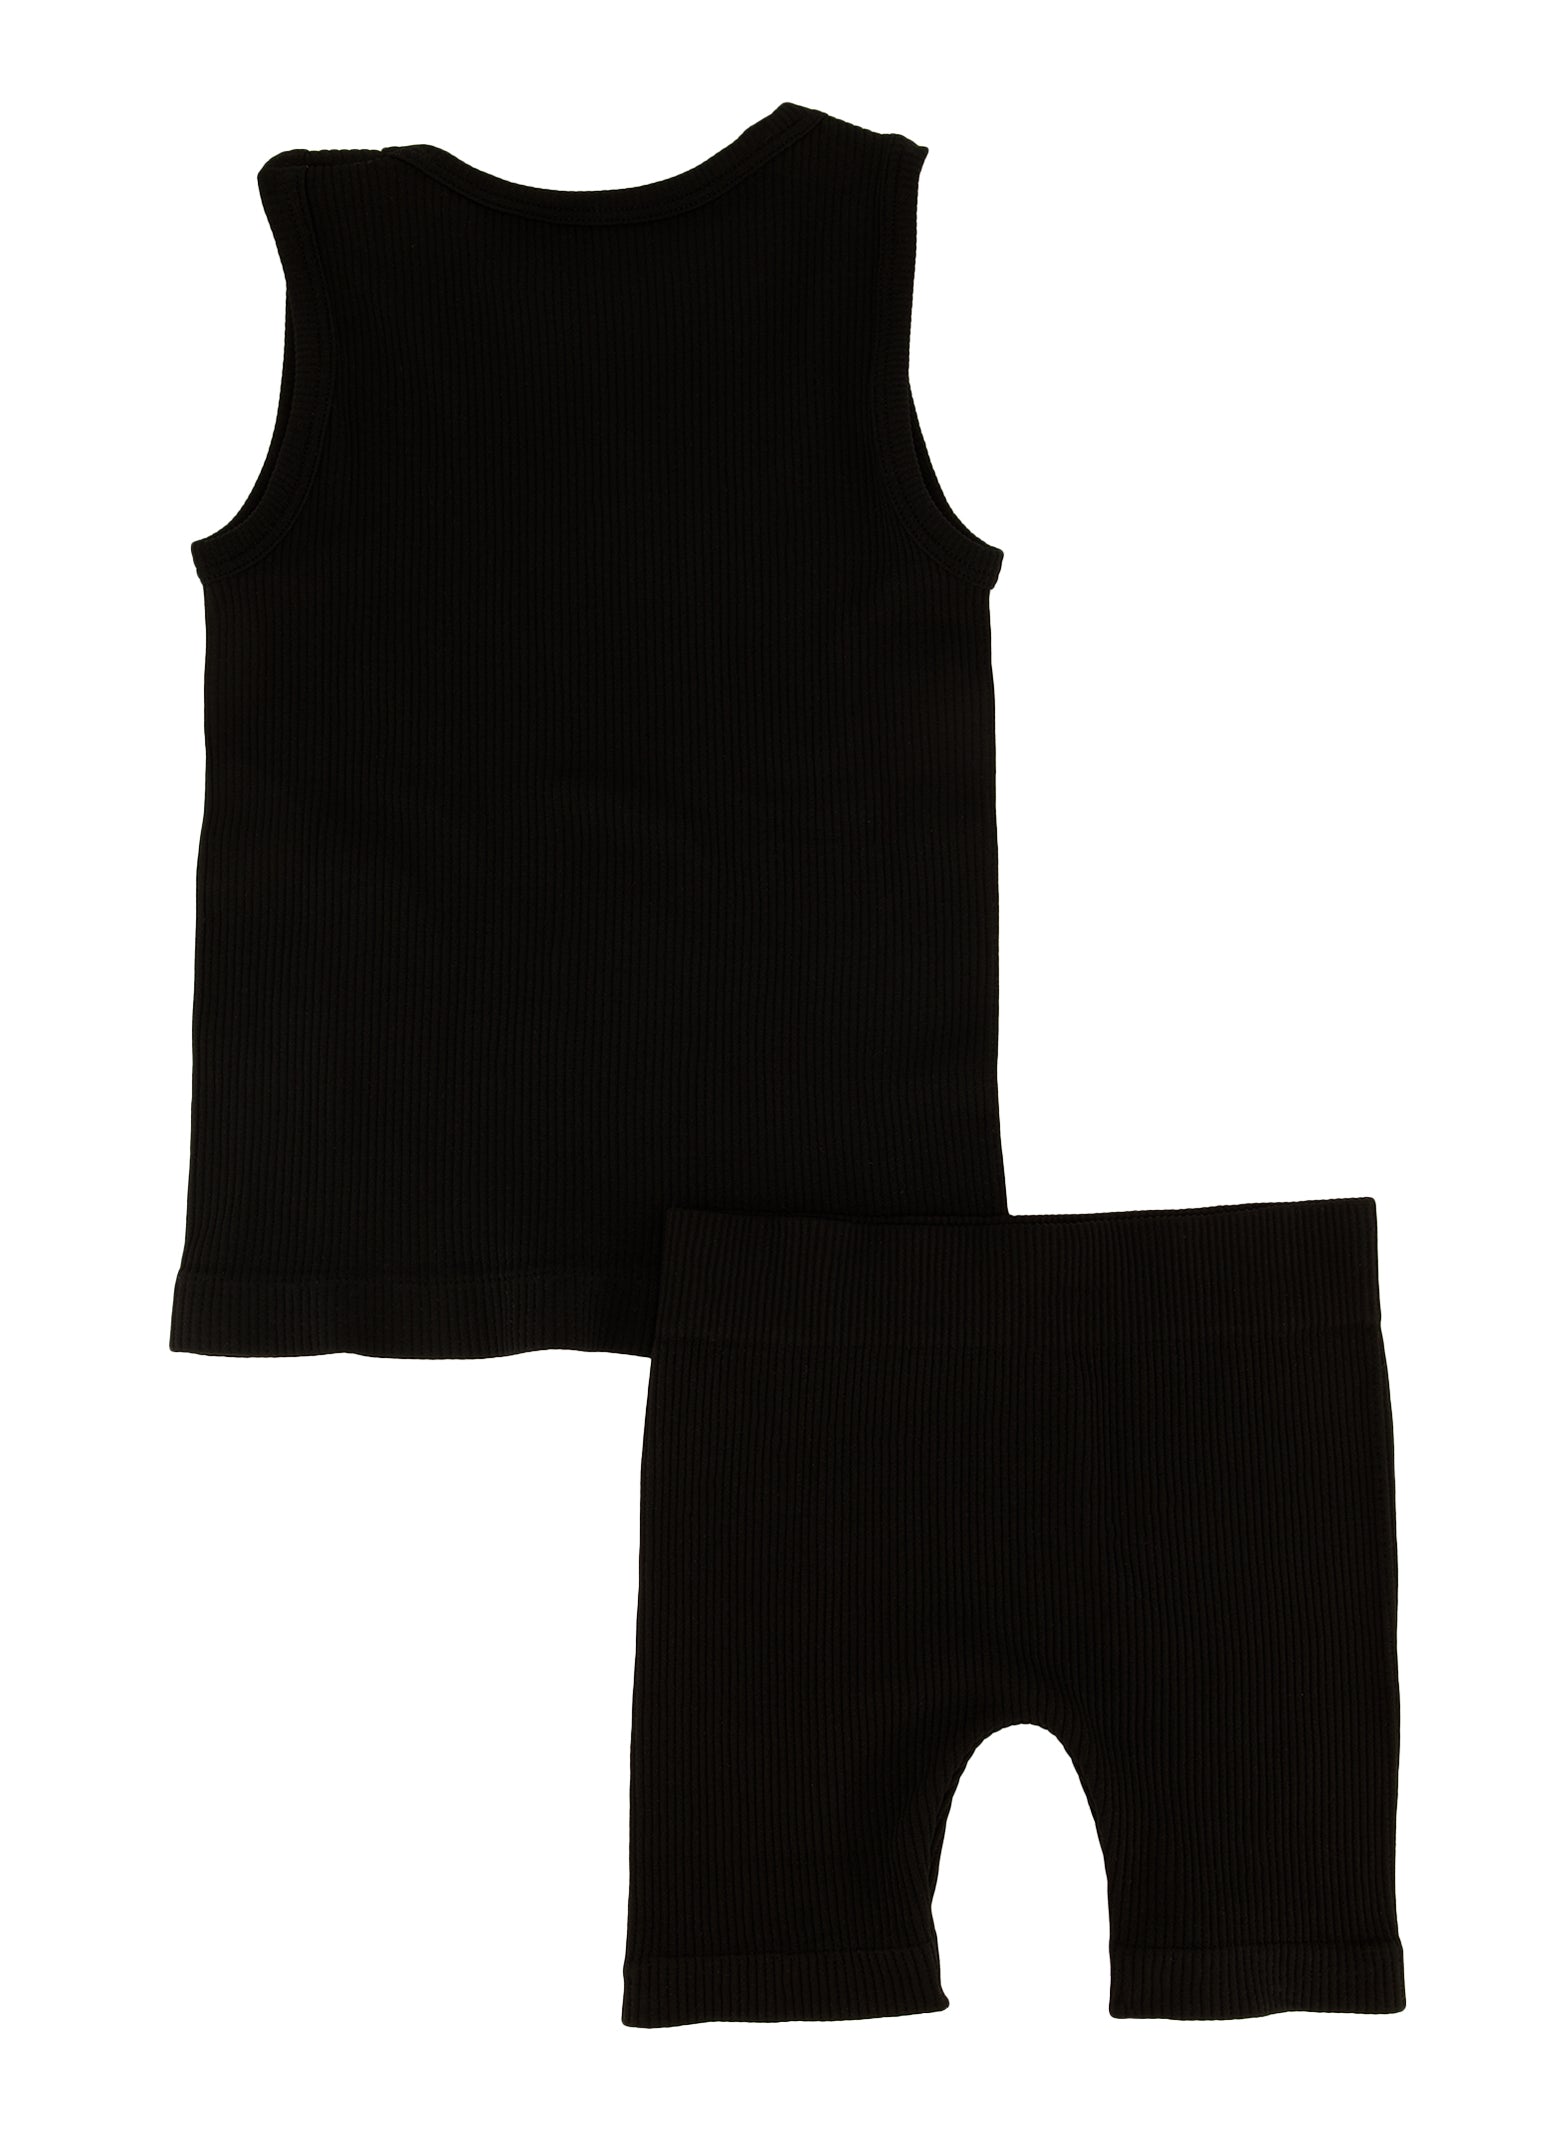 Little Girls Seamless Tank Top and Bike Shorts Set, Black, Size 4